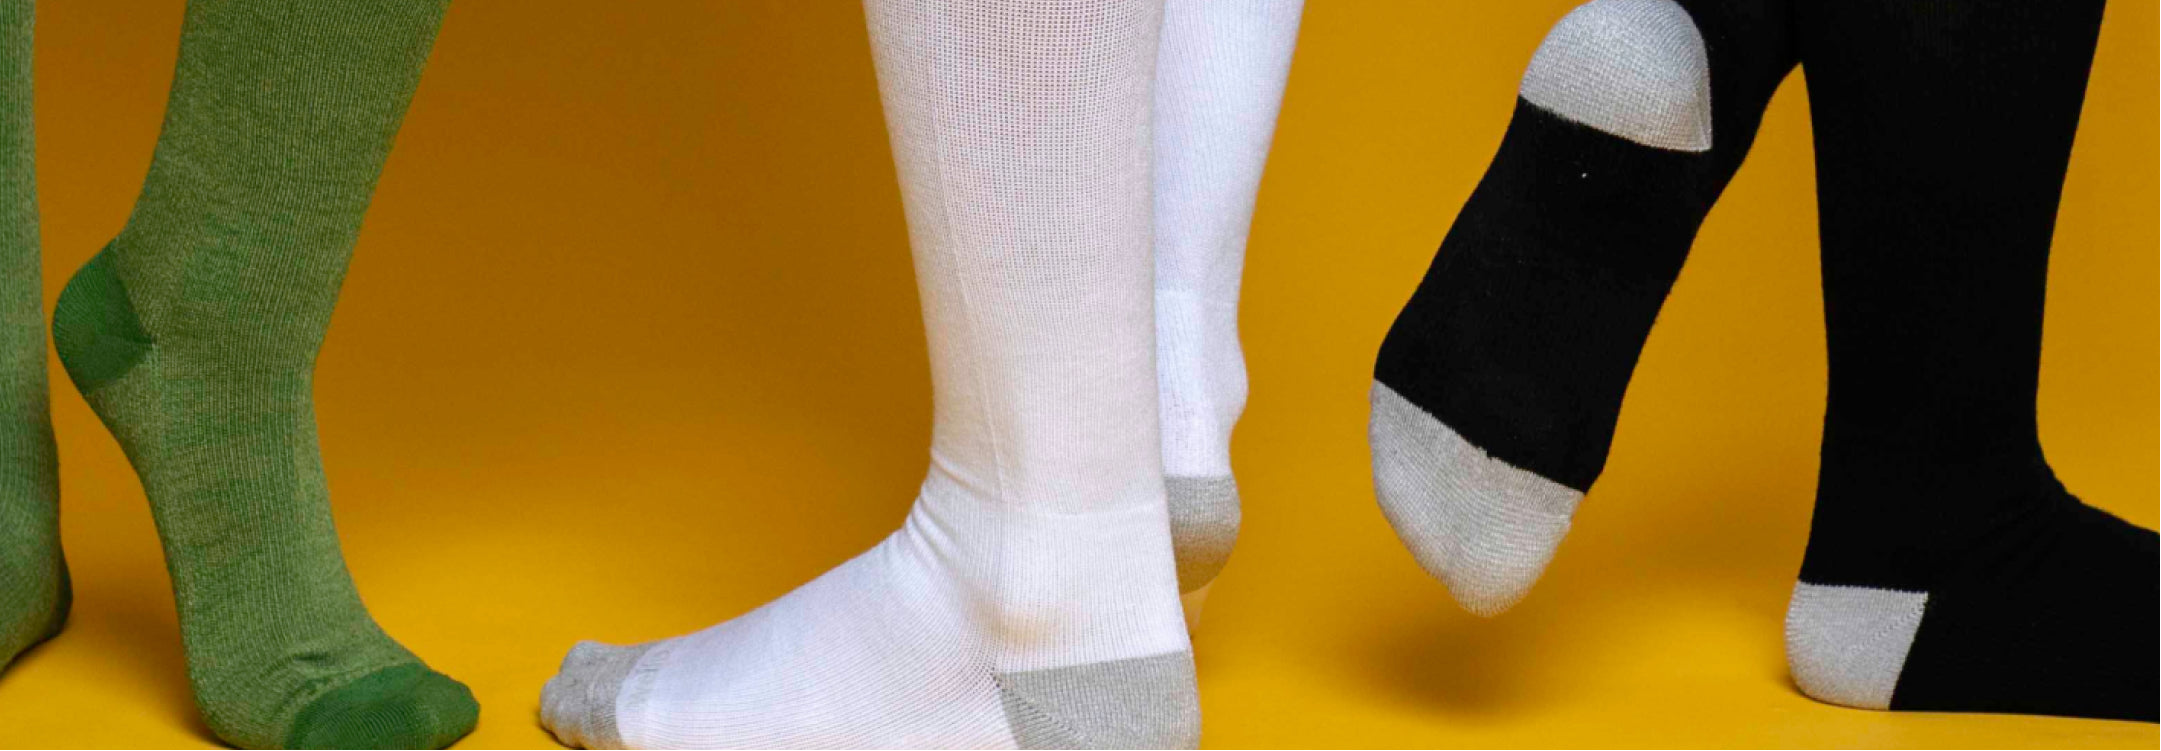 Best Compression Socks for Teachers - We Are Teachers